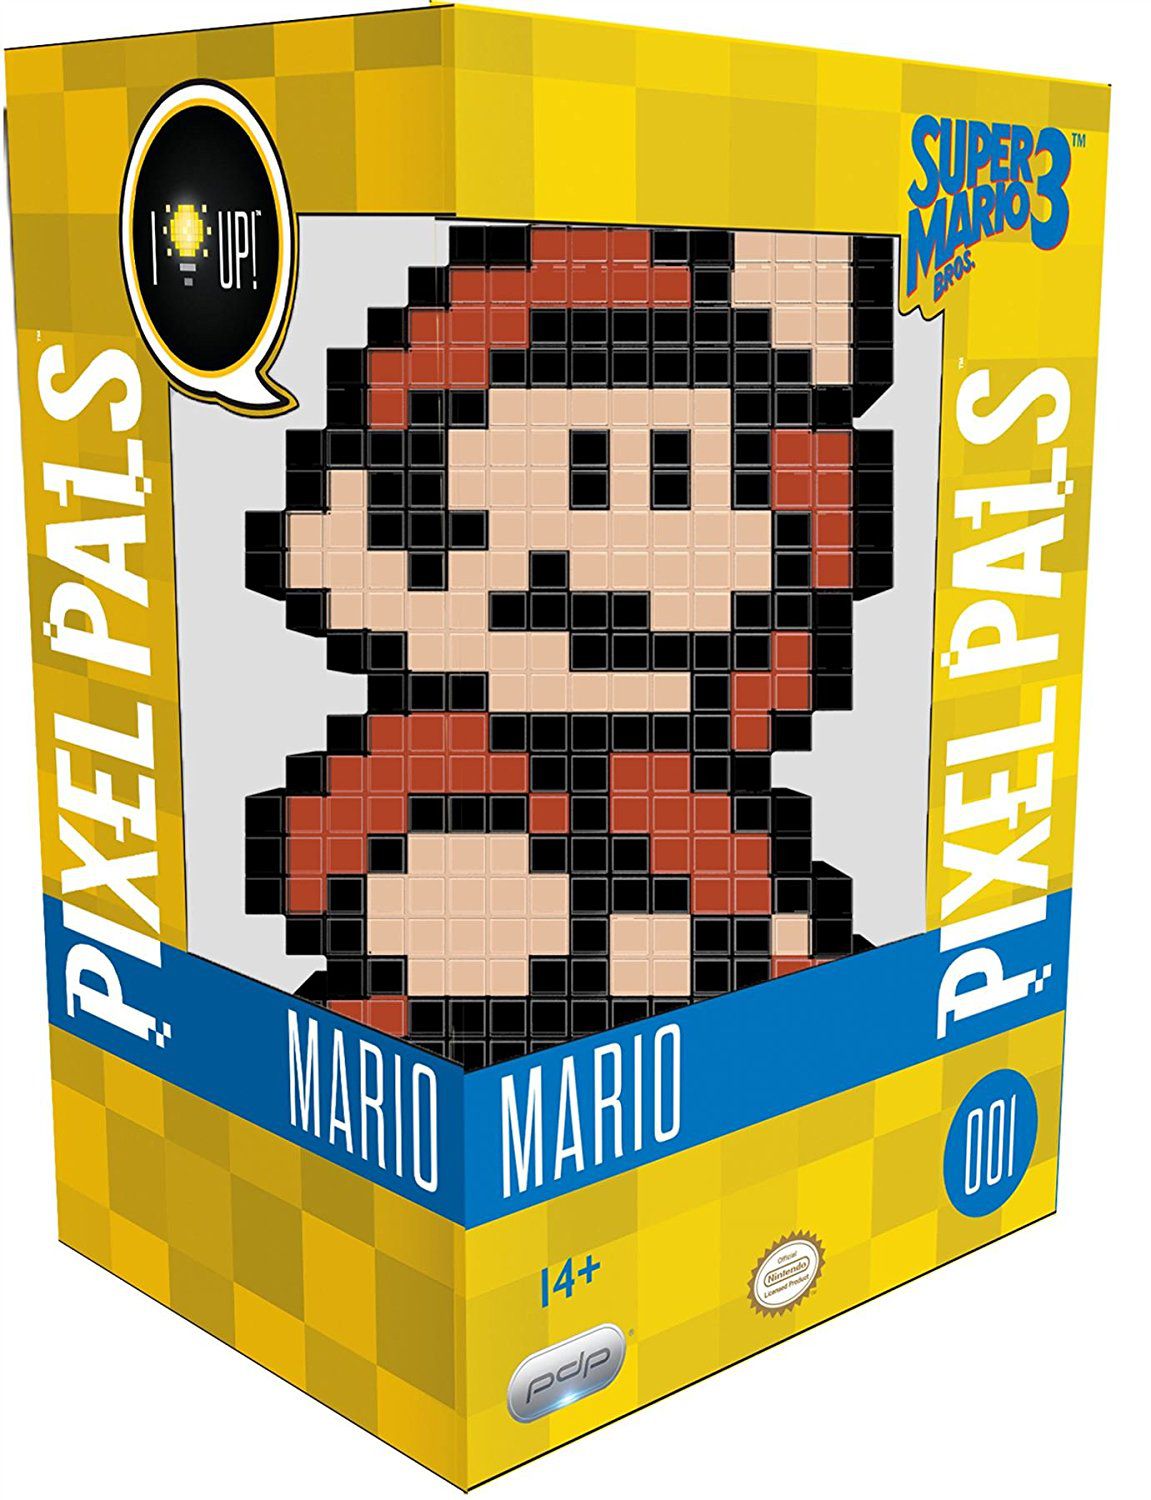 PDP Pixel Pals Nintendo Super Mario Bros 001 Mario - Game Games